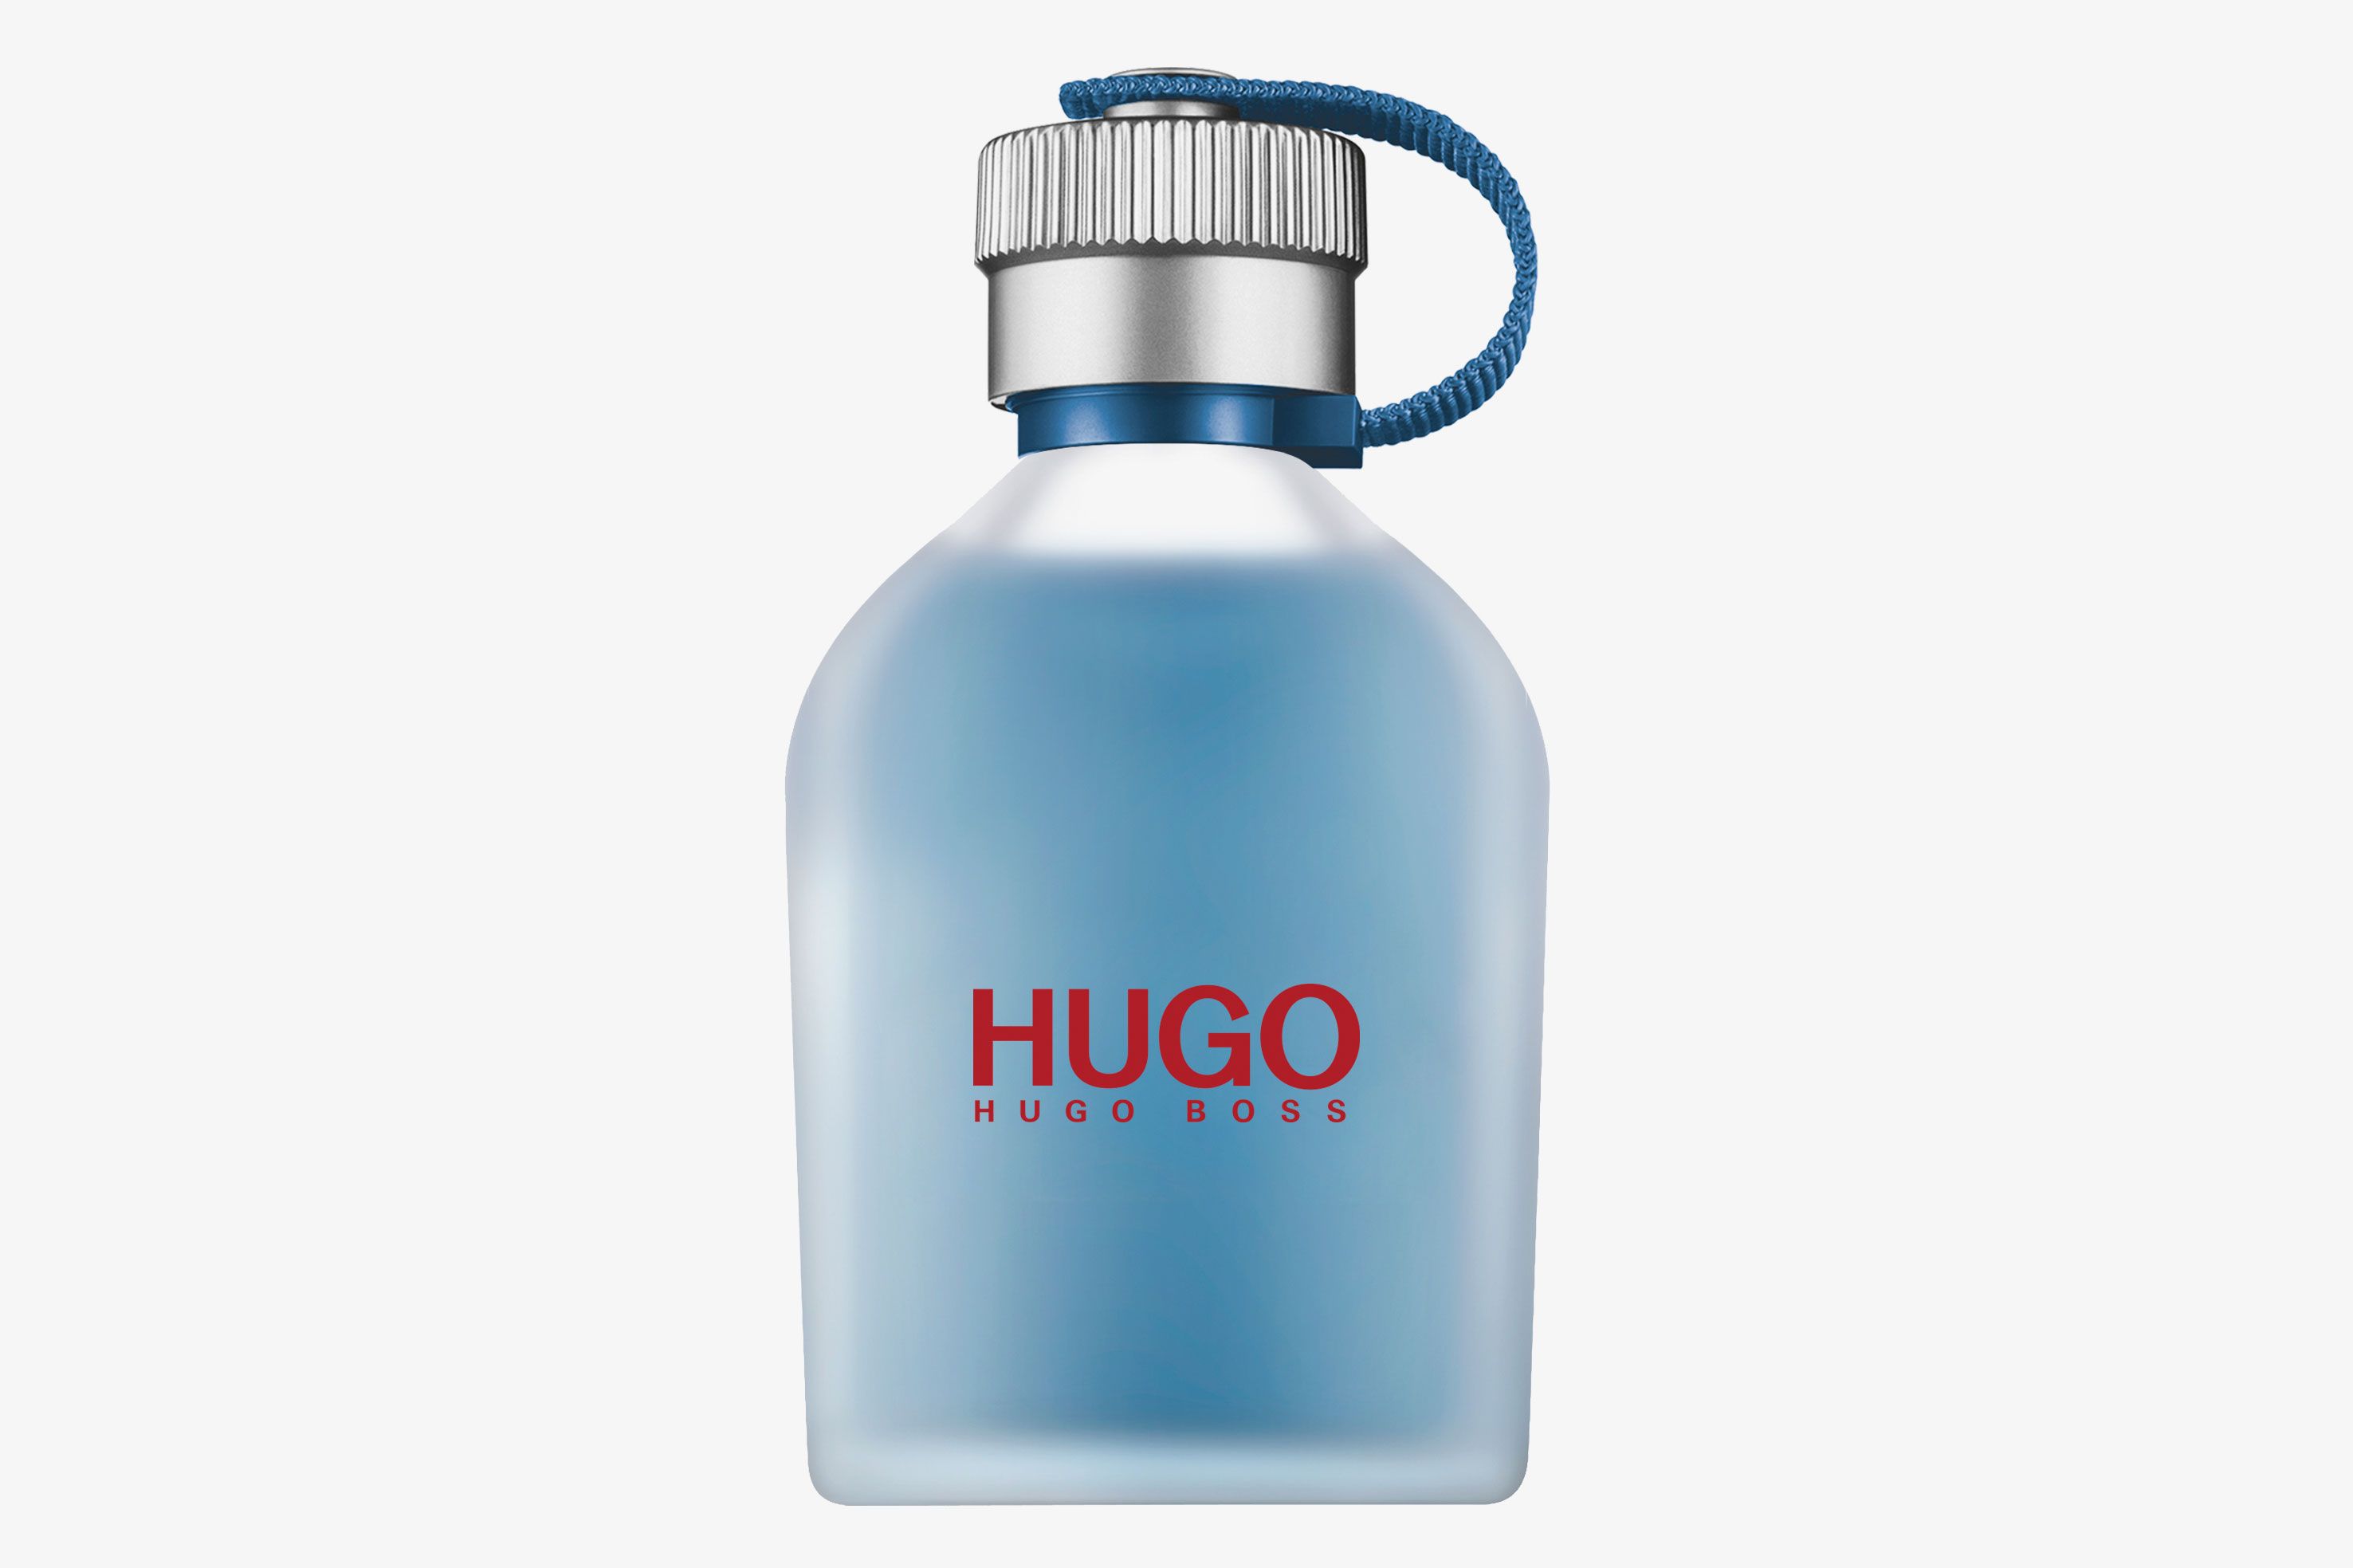 Хьюго босс описание. Туалетная вода Hugo Boss Hugo man. Hugo Boss мужской Hugo туалетная вода (EDT) 75мл. Hugo Boss Hugo Eau de Toilette 125ml. Hugo Boss Now 75ml.